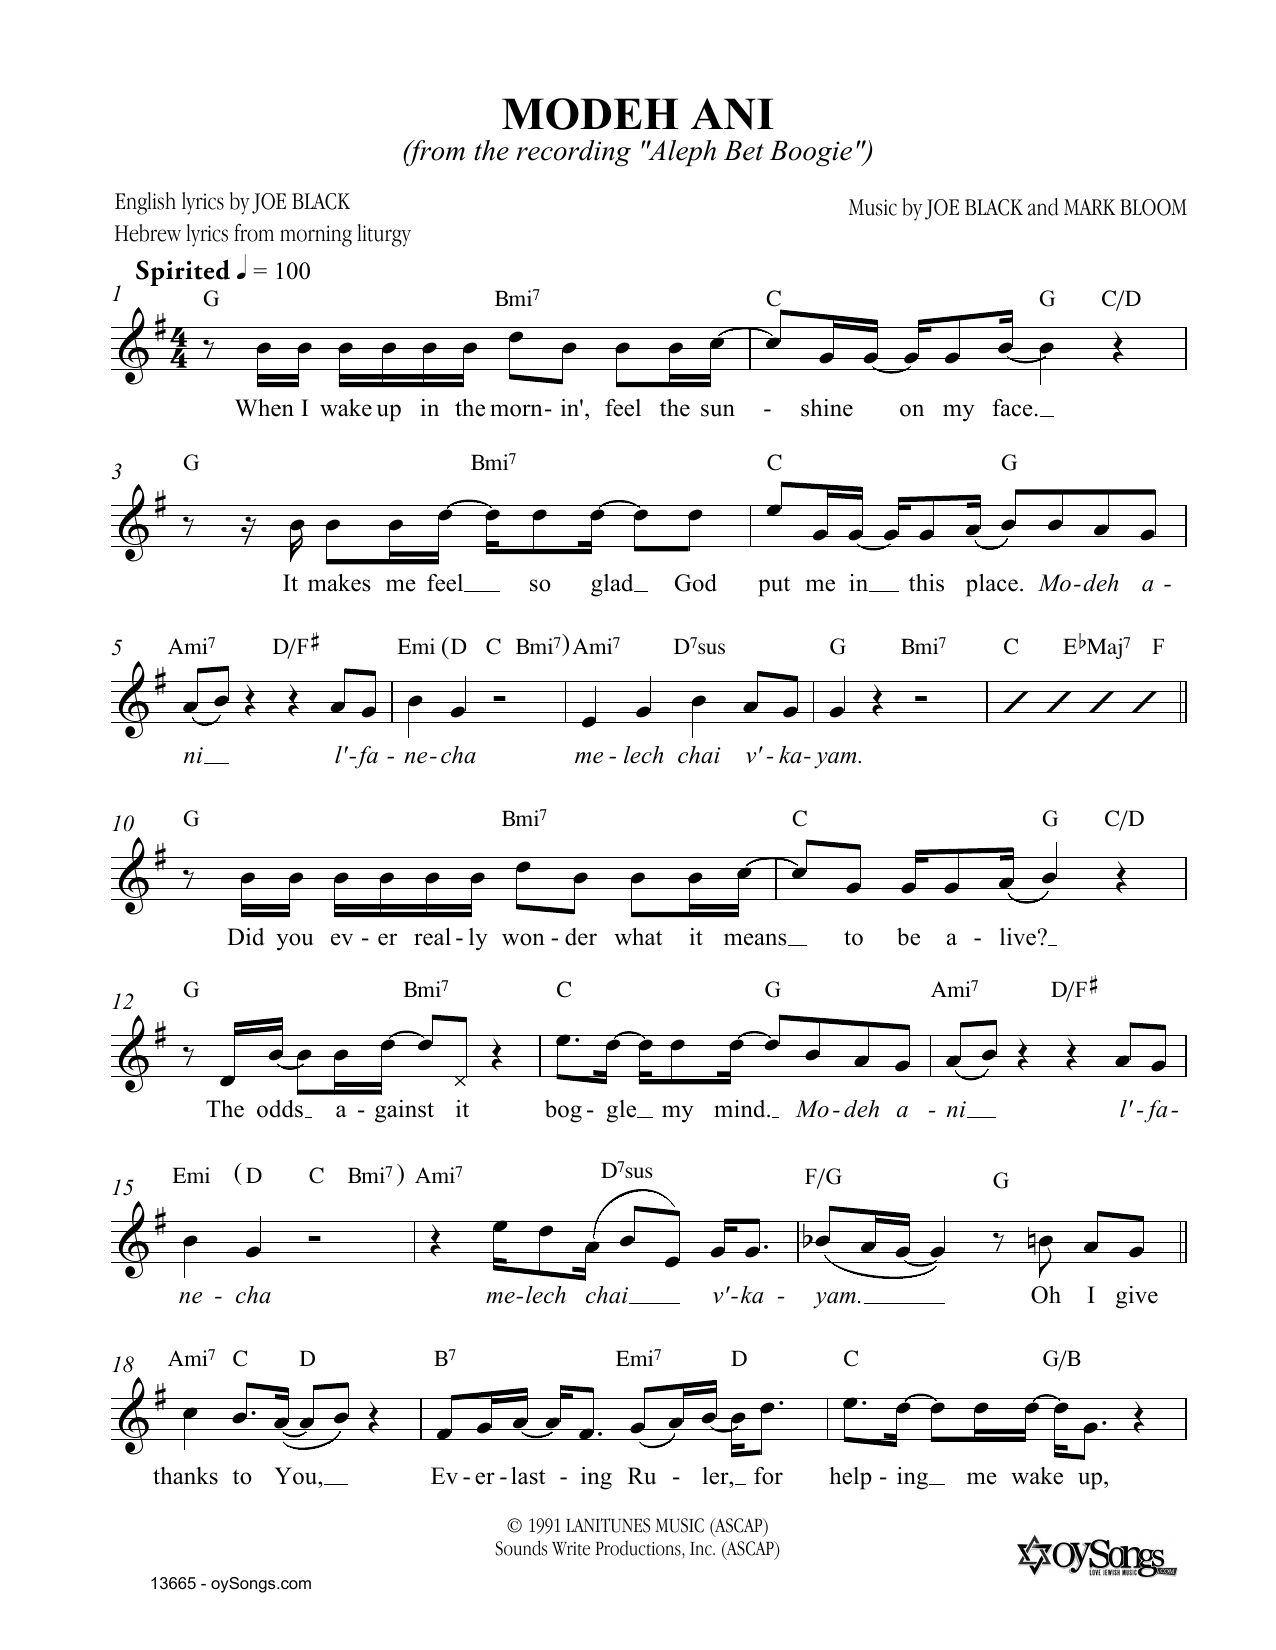 Joe Black Modeh Ani Sheet Music Notes & Chords for Melody Line, Lyrics & Chords - Download or Print PDF